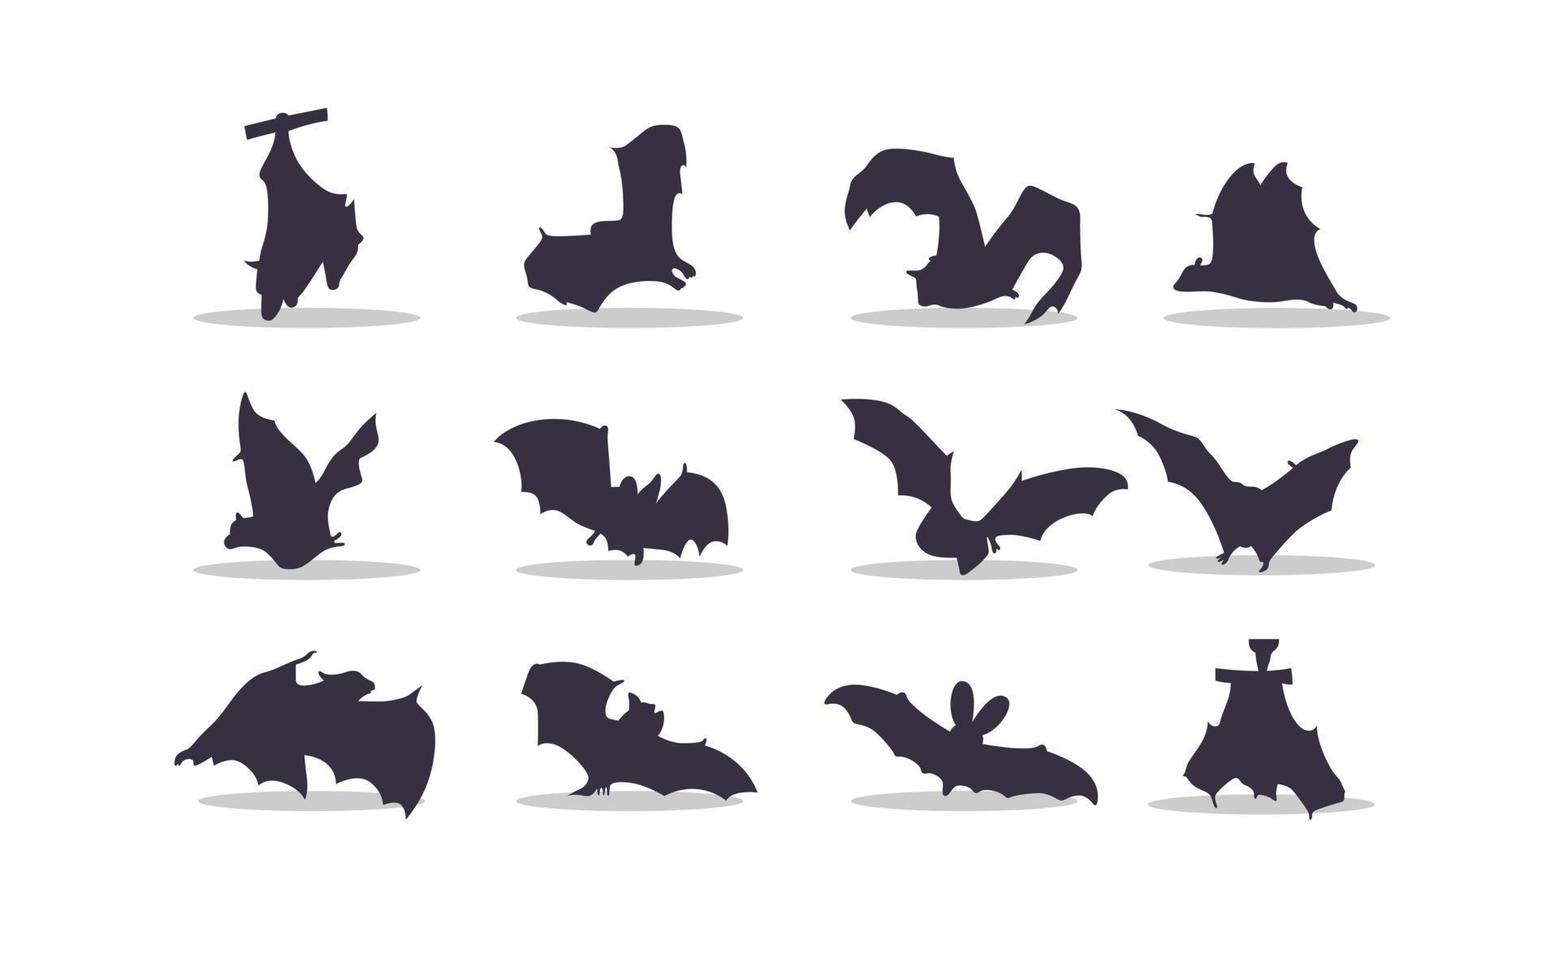 Diseño de ilustración de vector de silueta de murciélago